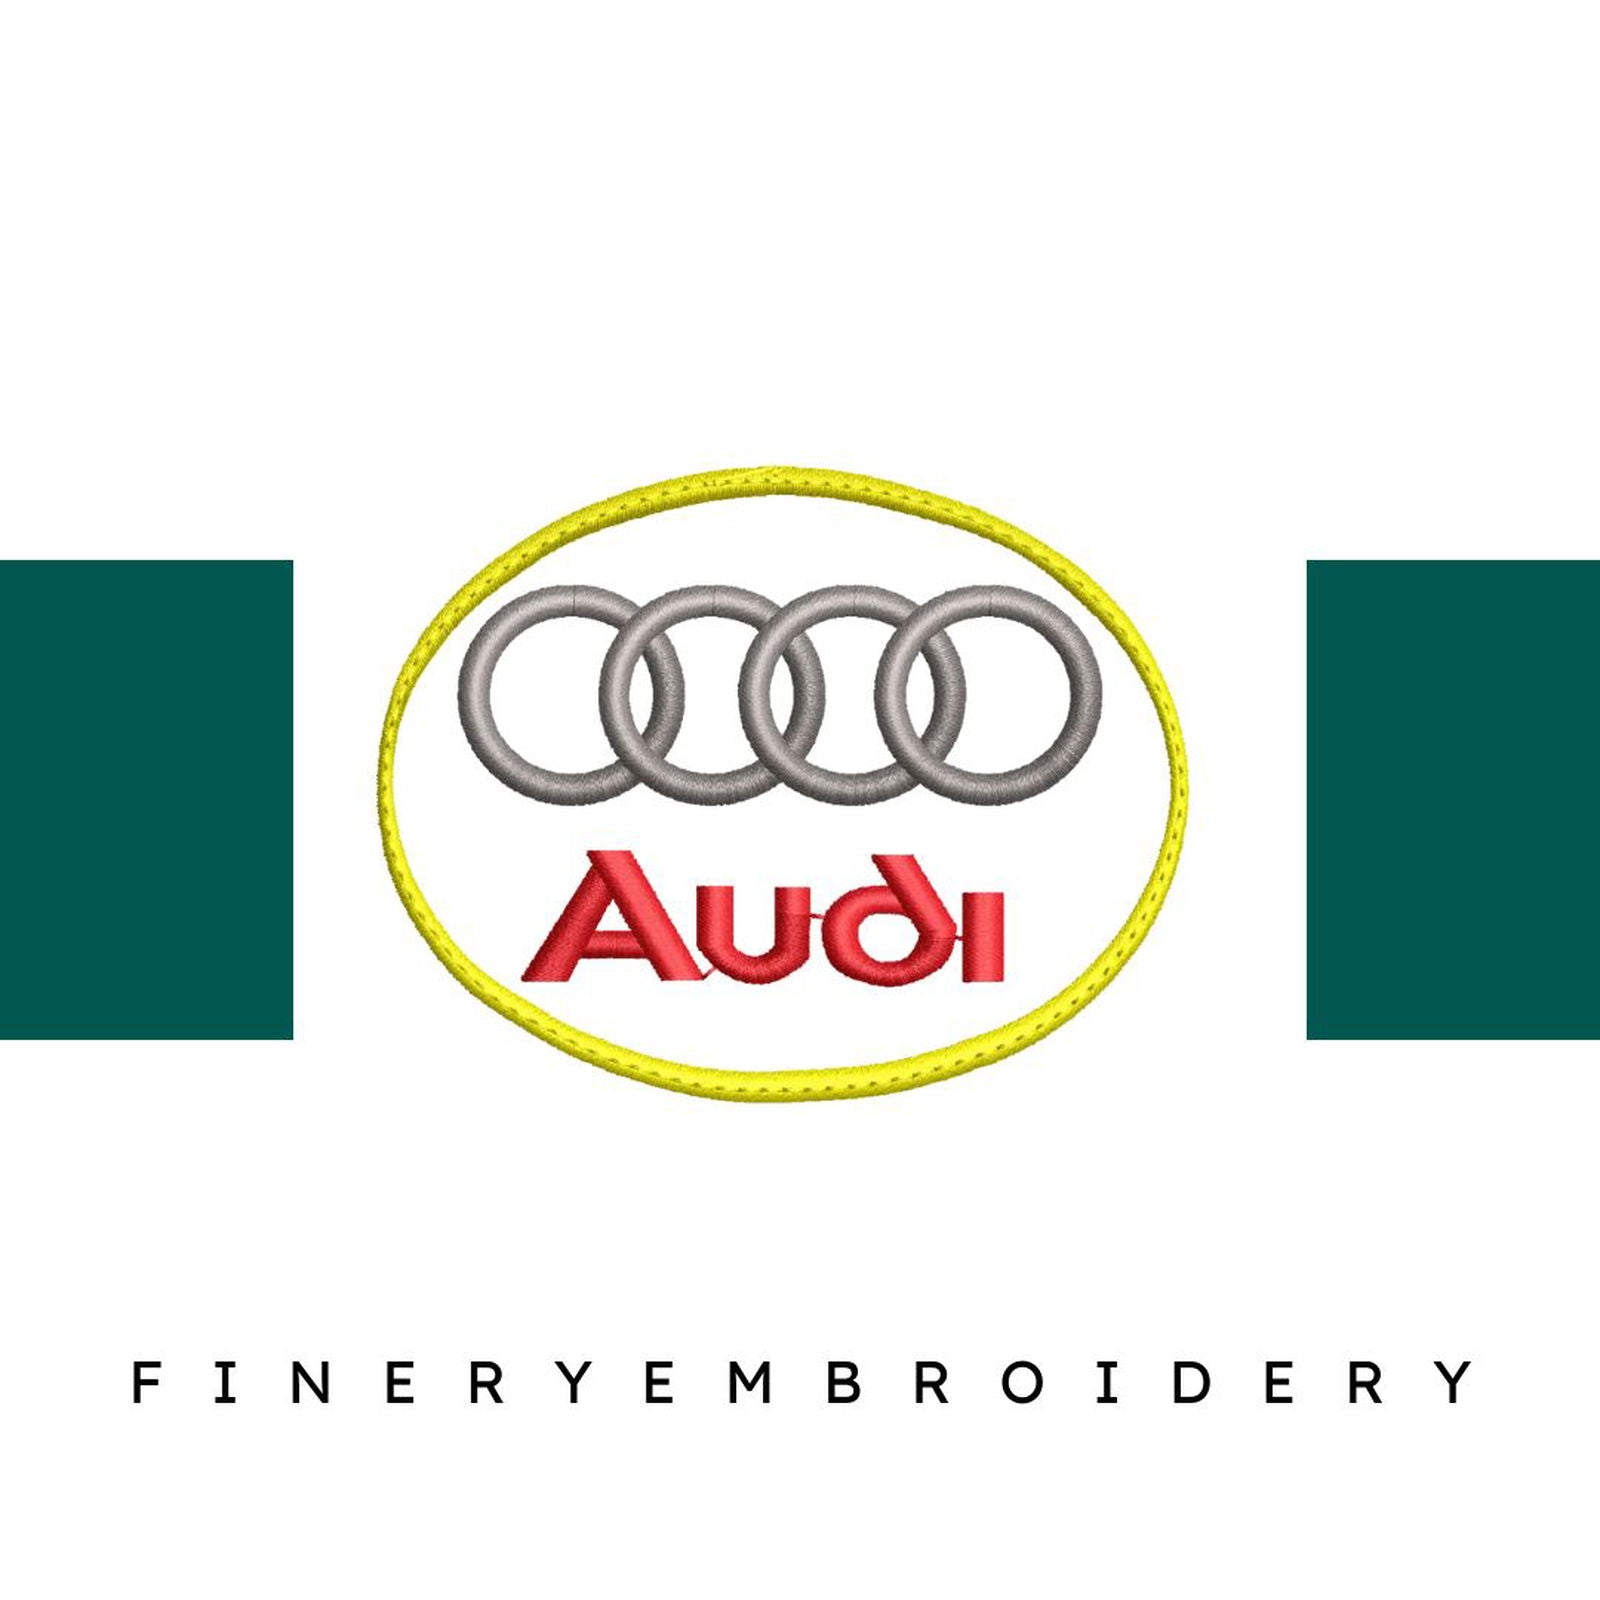 Audi 2 - Embroidery Design - FineryEmbroidery